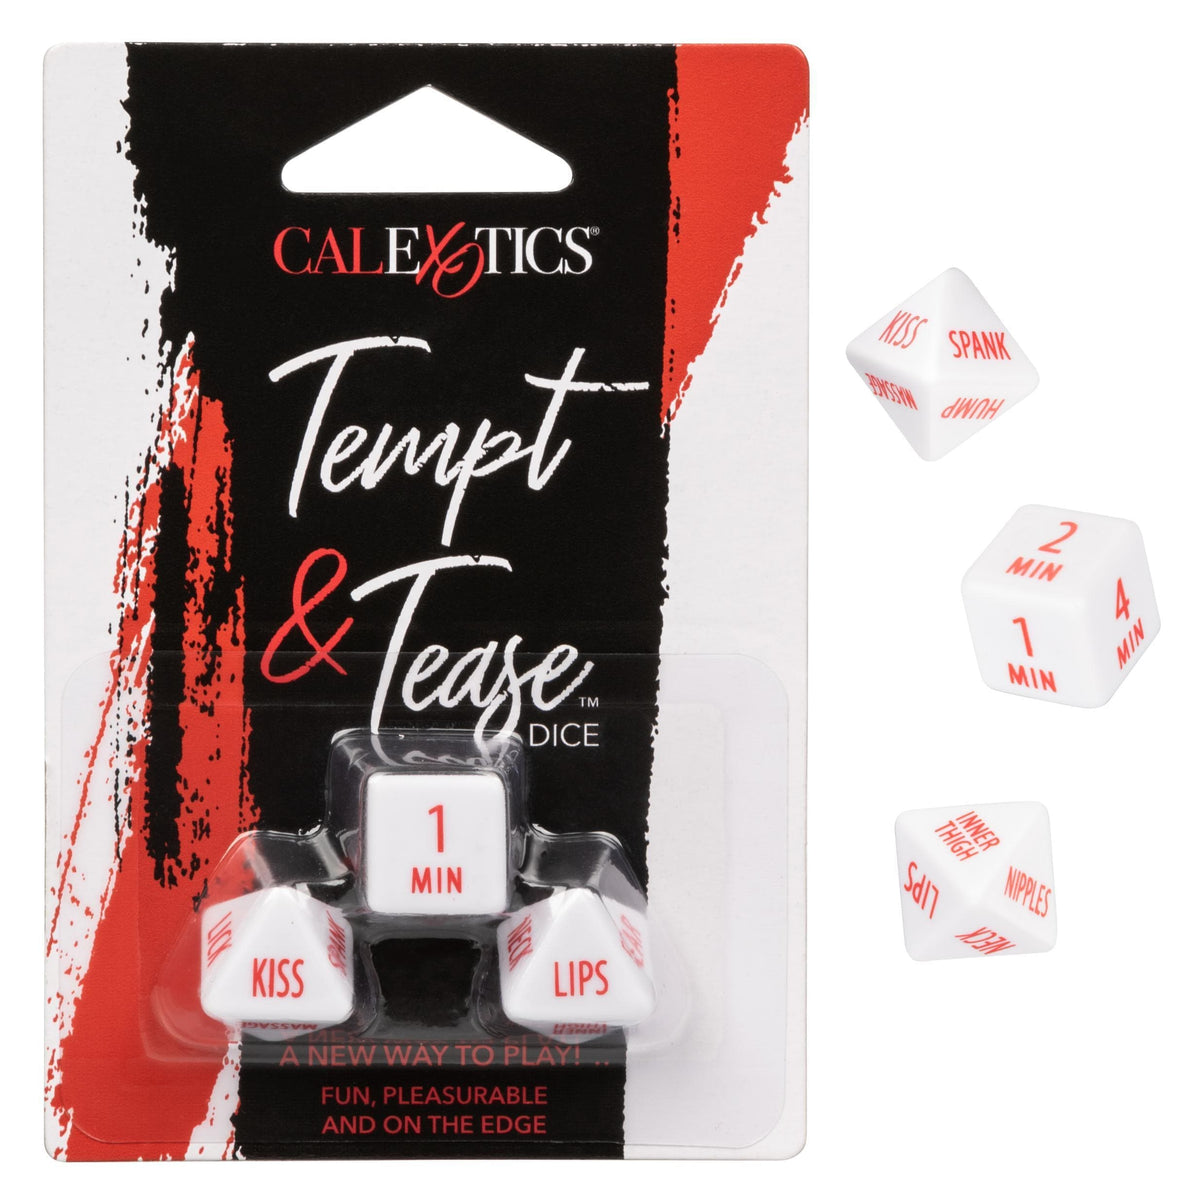 calexotics   tempt and tease dice